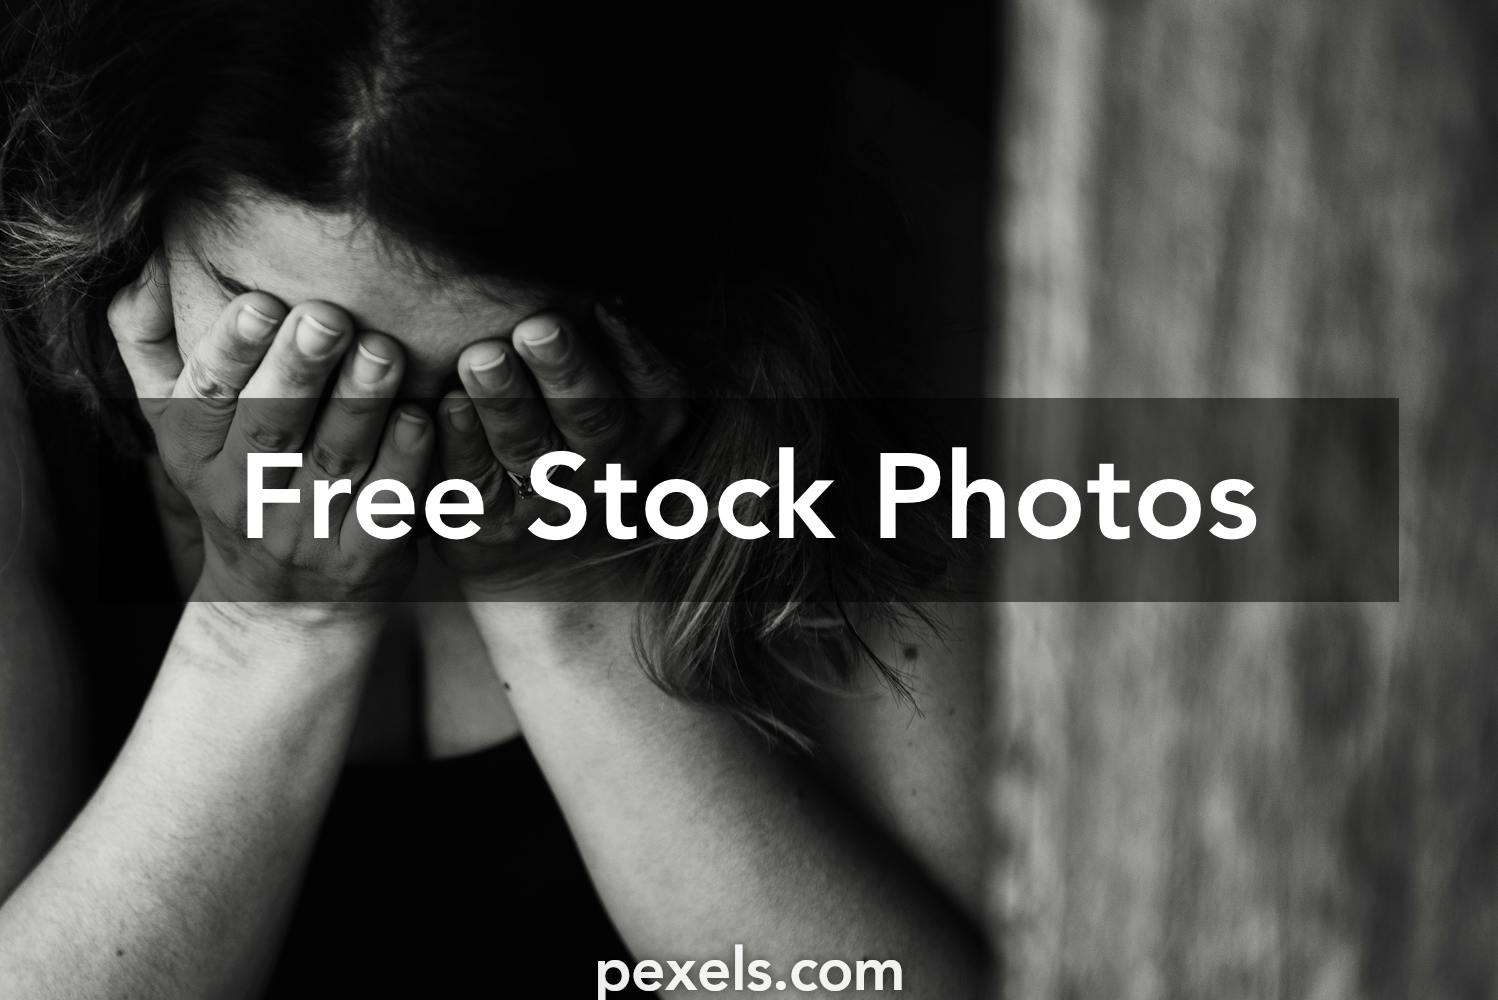 1000 Interesting Human Trafficking Photos Pexels Free Stock Photos Images, Photos, Reviews